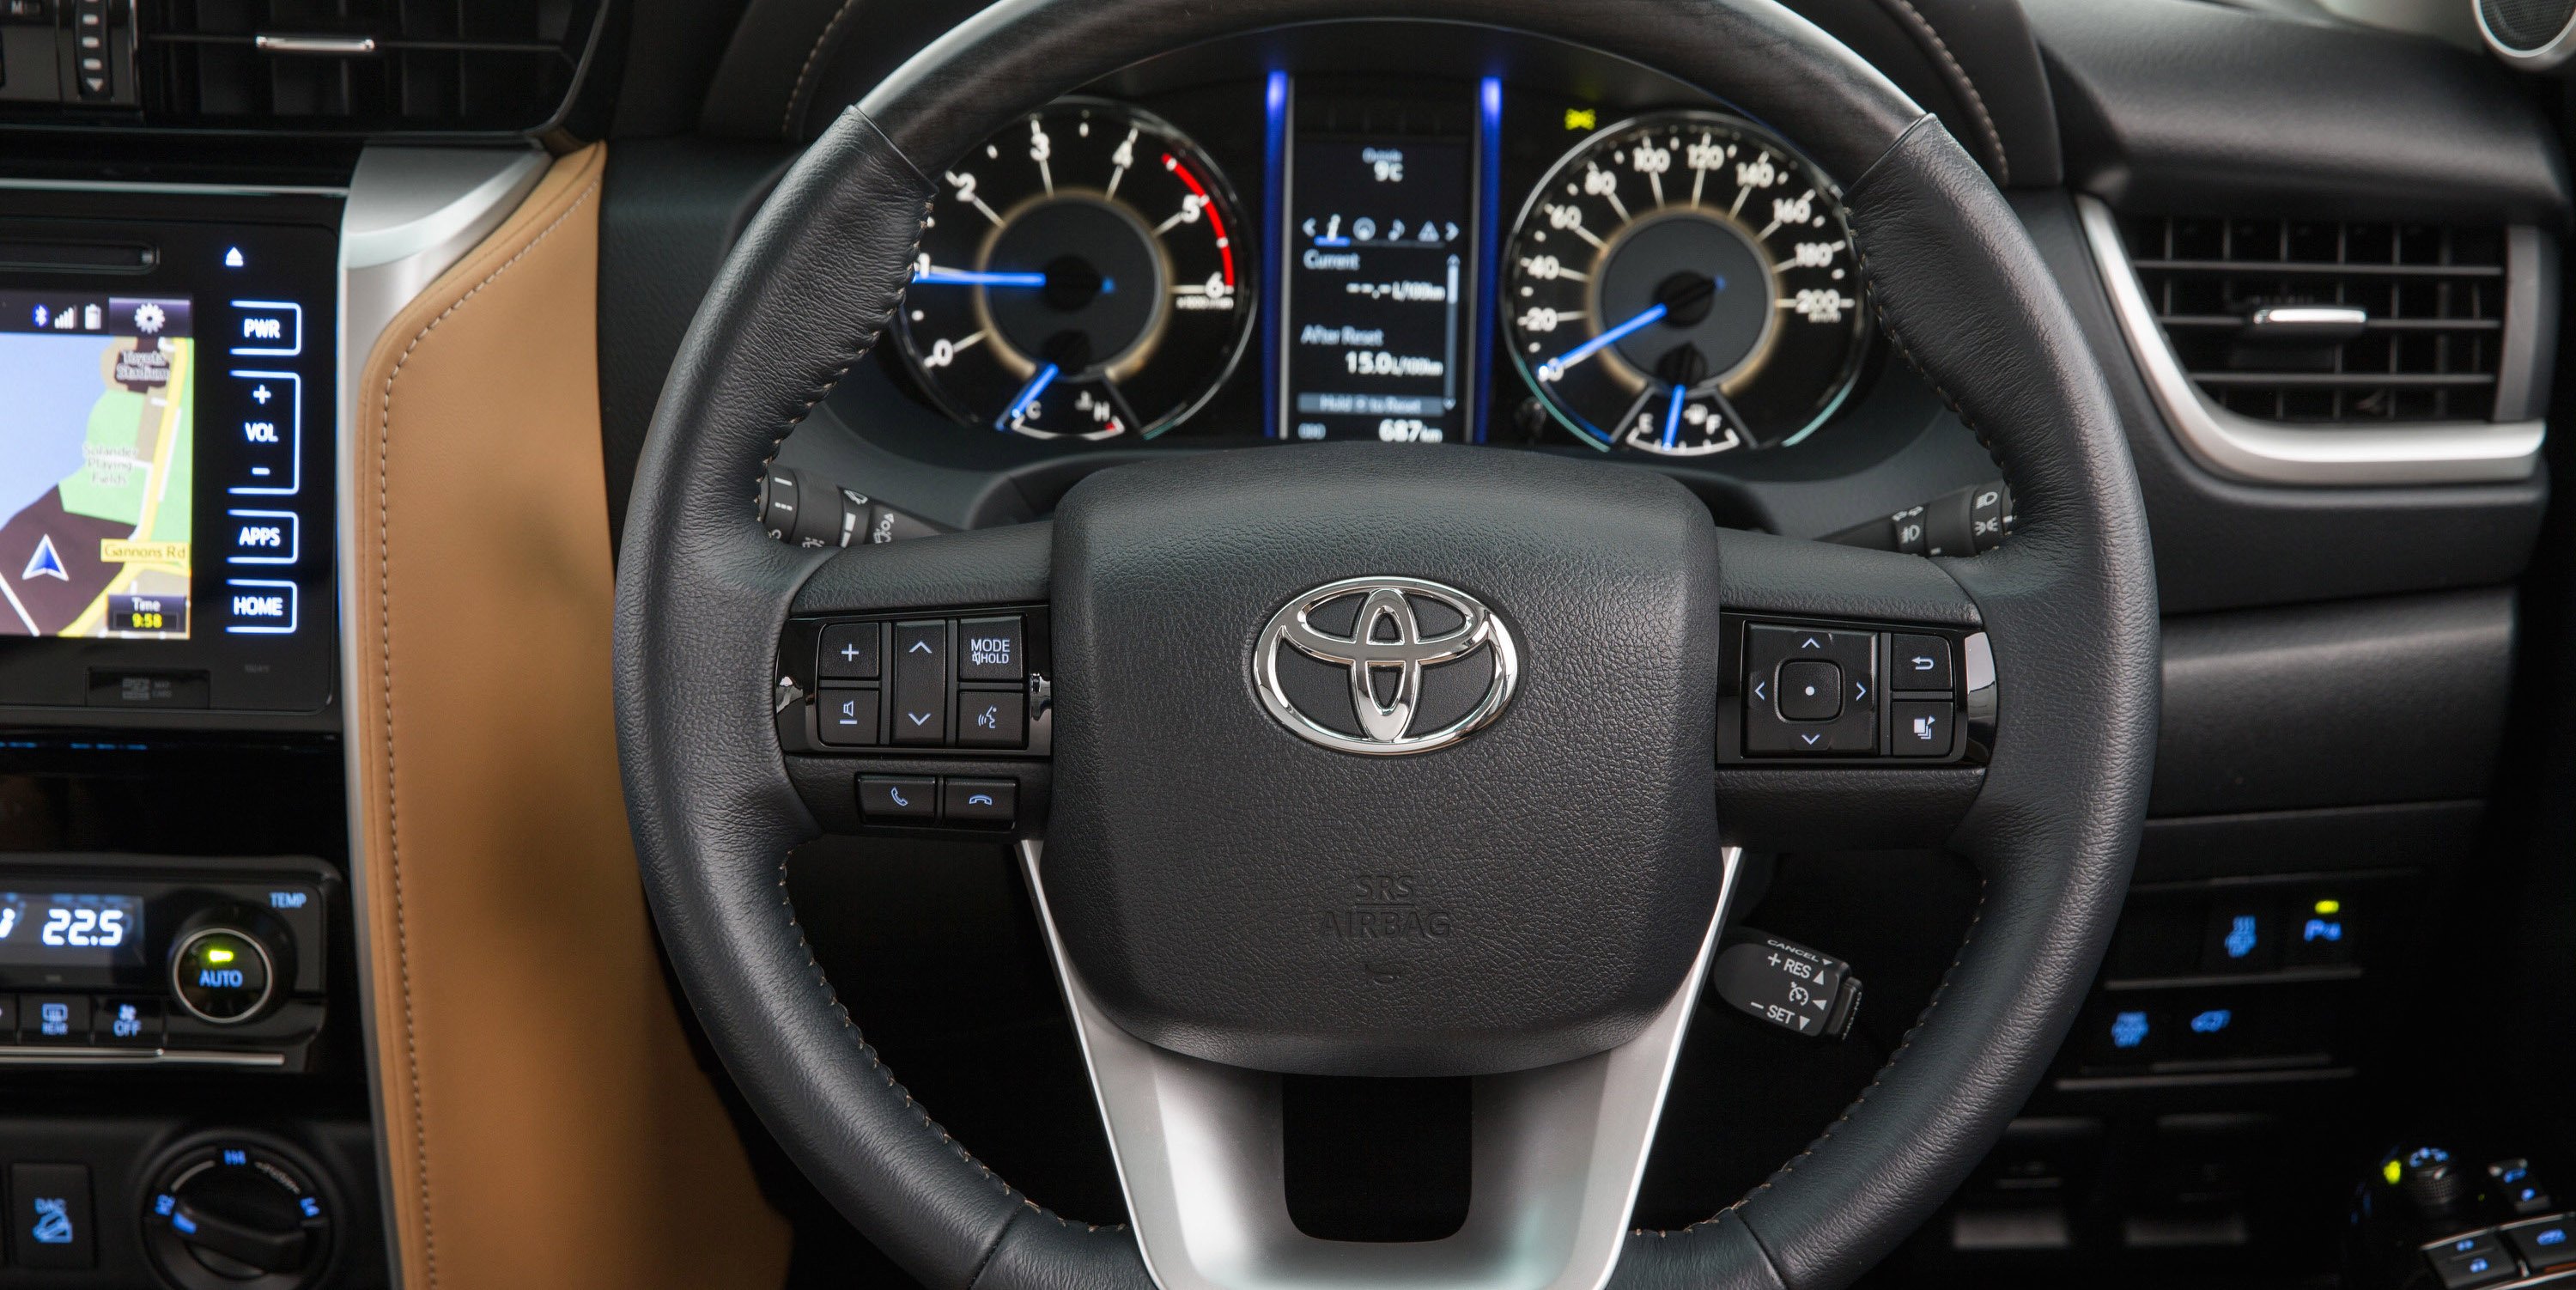 2016 Toyota Fortuner interior revealed - photos | CarAdvice